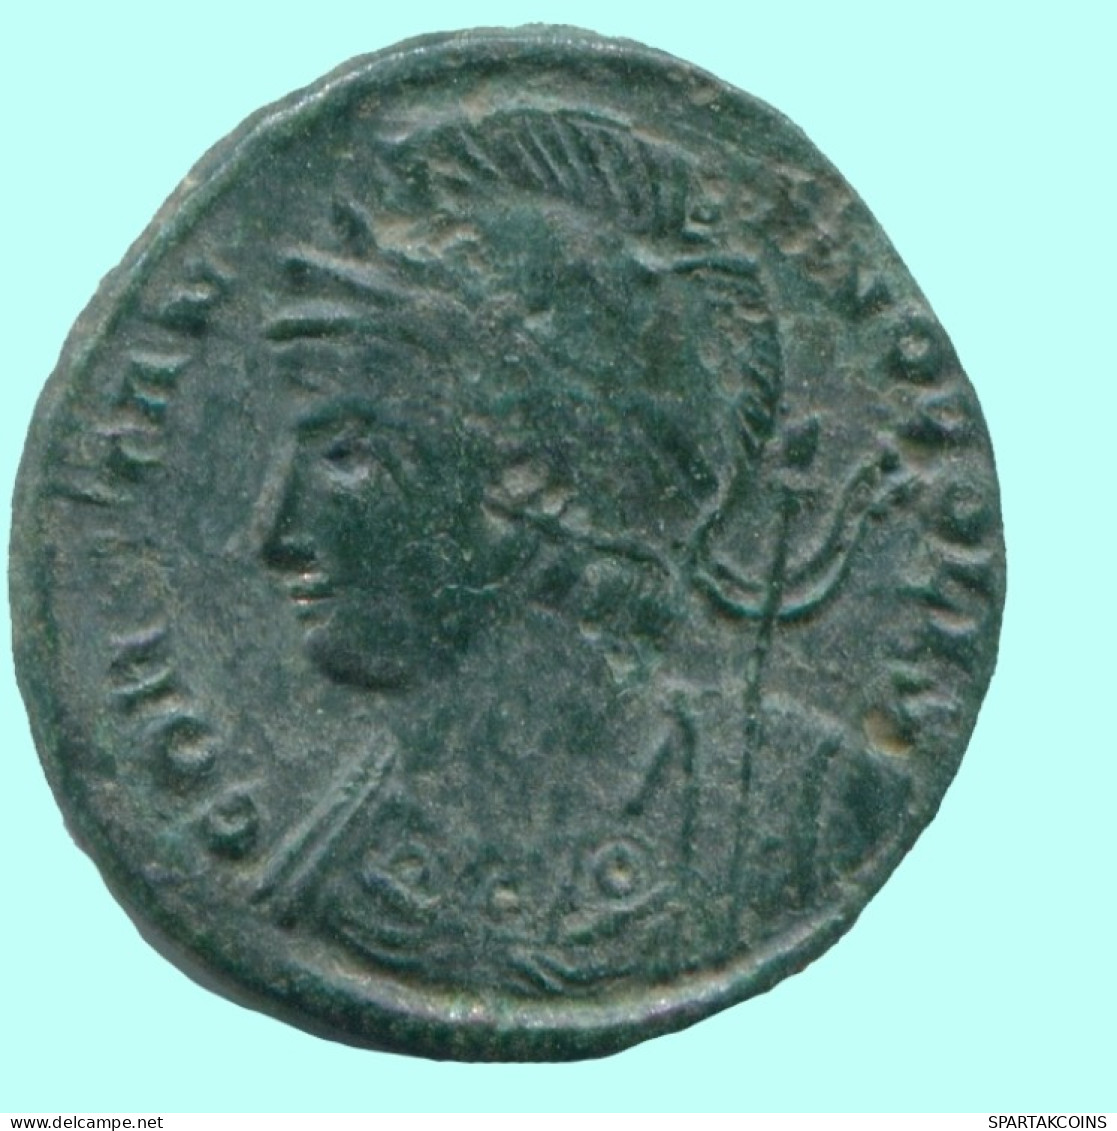 CONSTANTINOPOLIS AD 334-335 VICTORY BSIS 2.2g/18mm #ANC13068.17.D.A - El Impero Christiano (307 / 363)